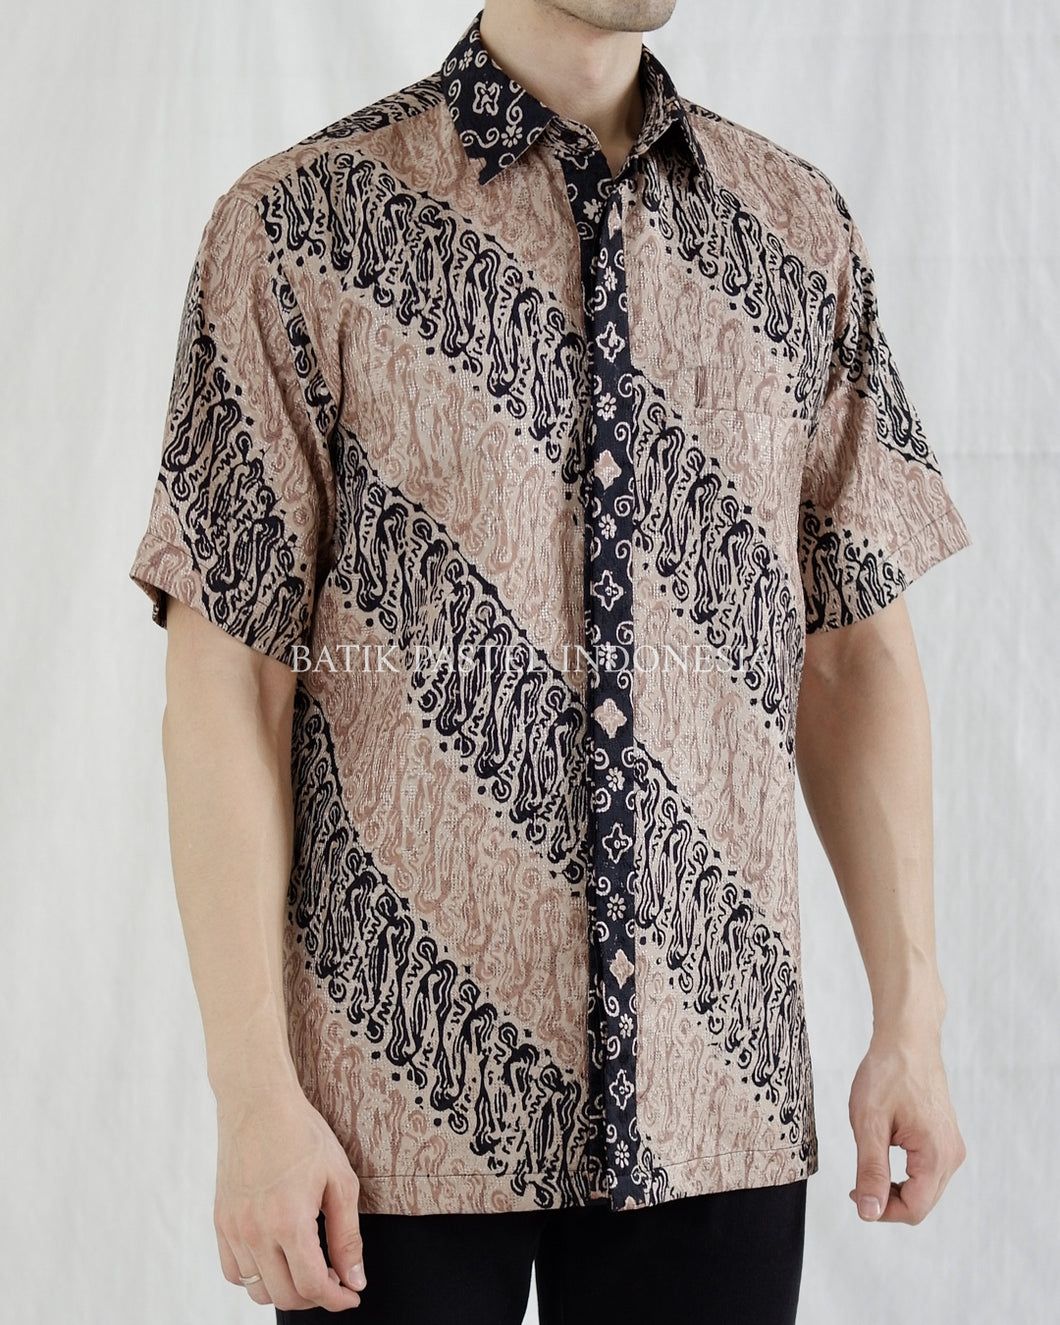 PO Batik Shirt - Linda 424